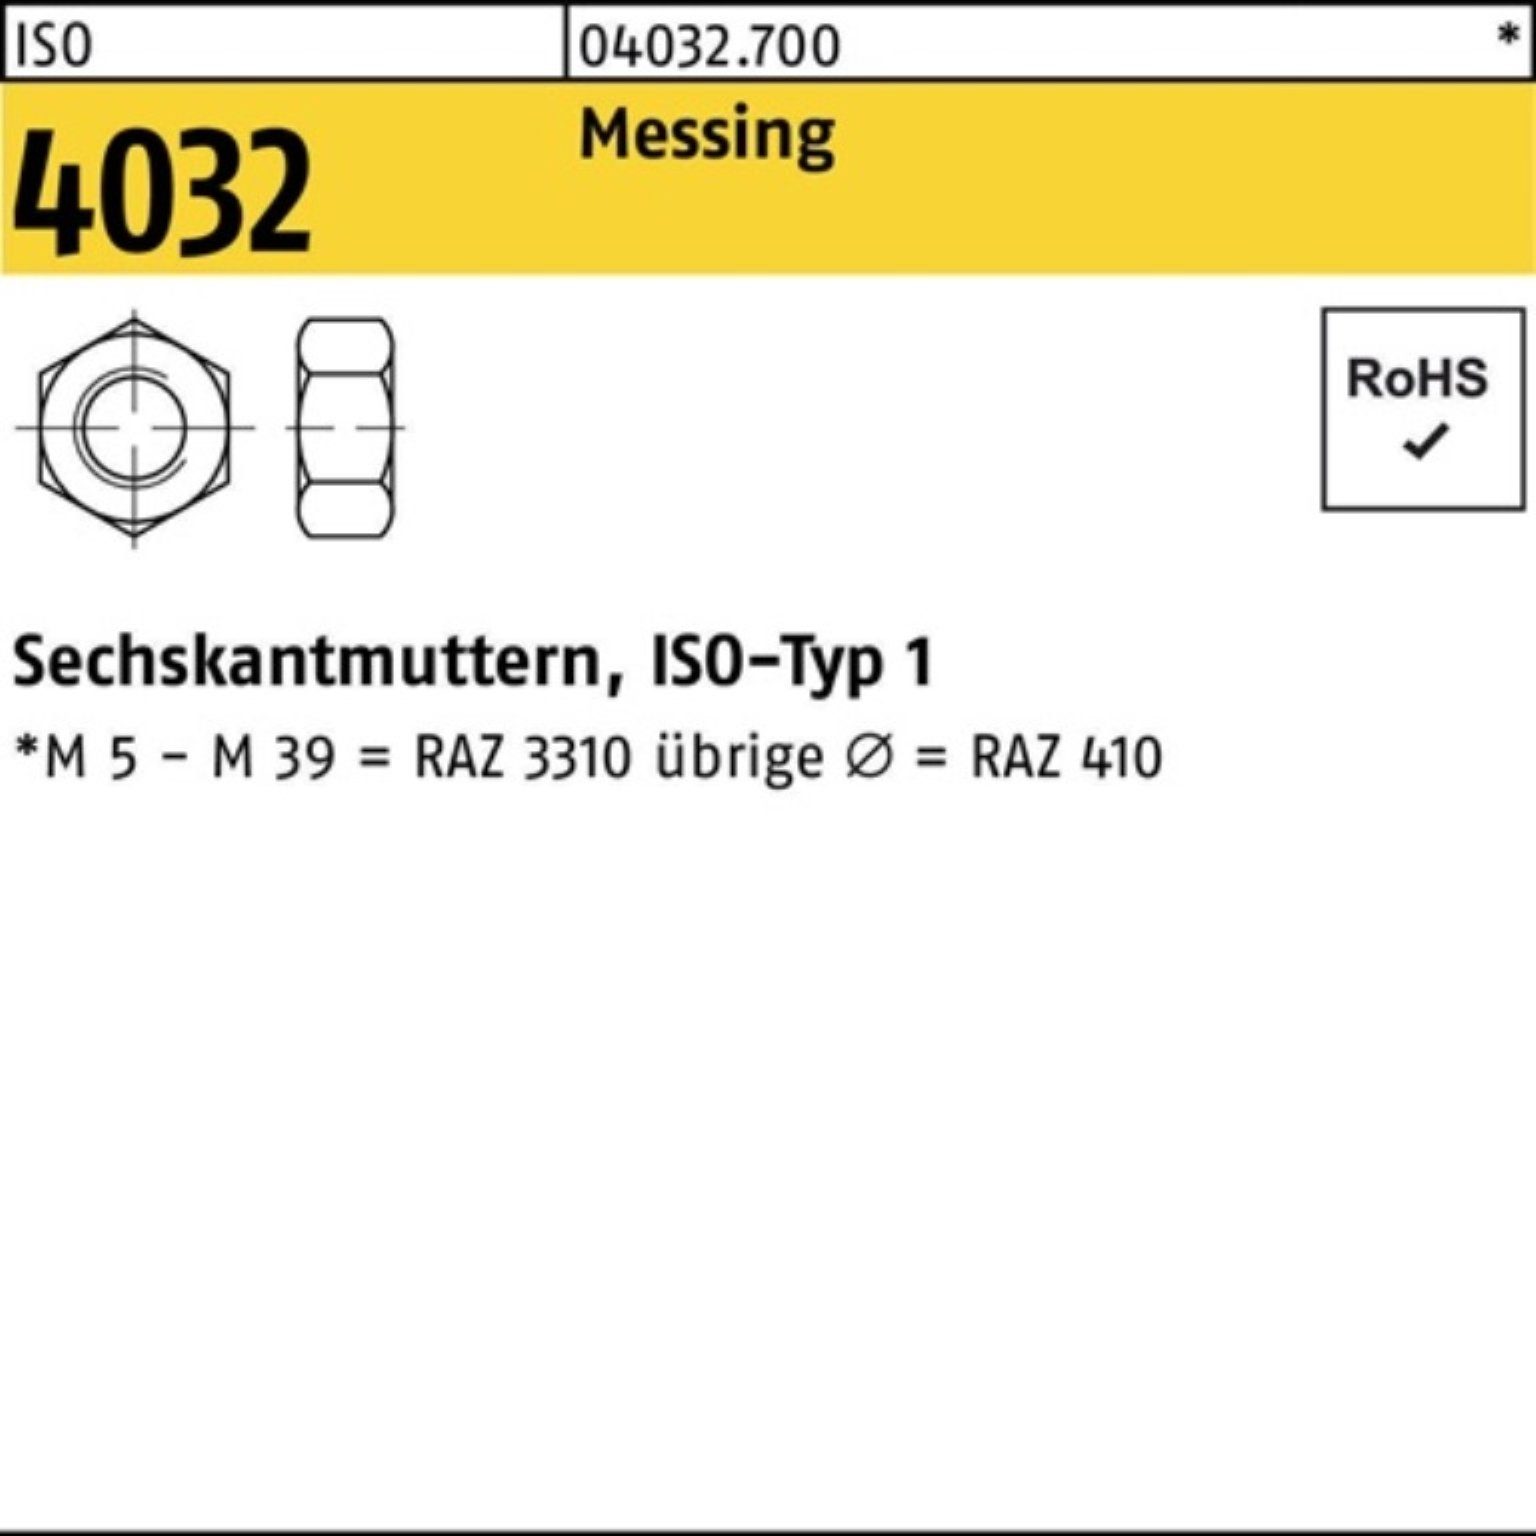 Bufab Muttern 100er 4032 M36 5 ISO Stück Pack Mess Messing 4032 Sechskantmutter ISO